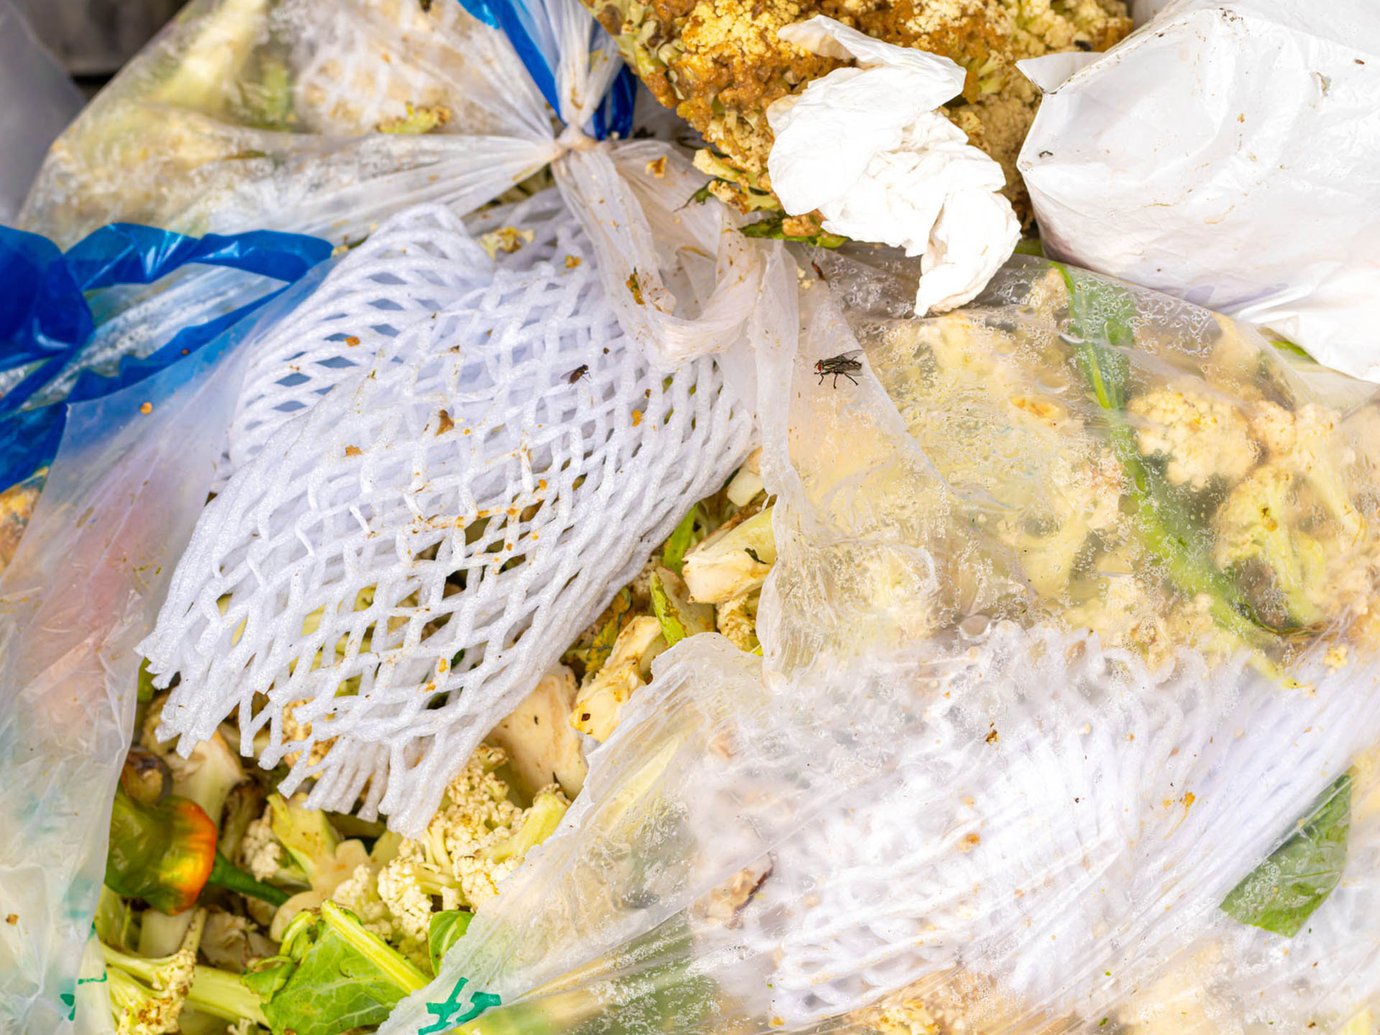 food waste in clear garbage bags